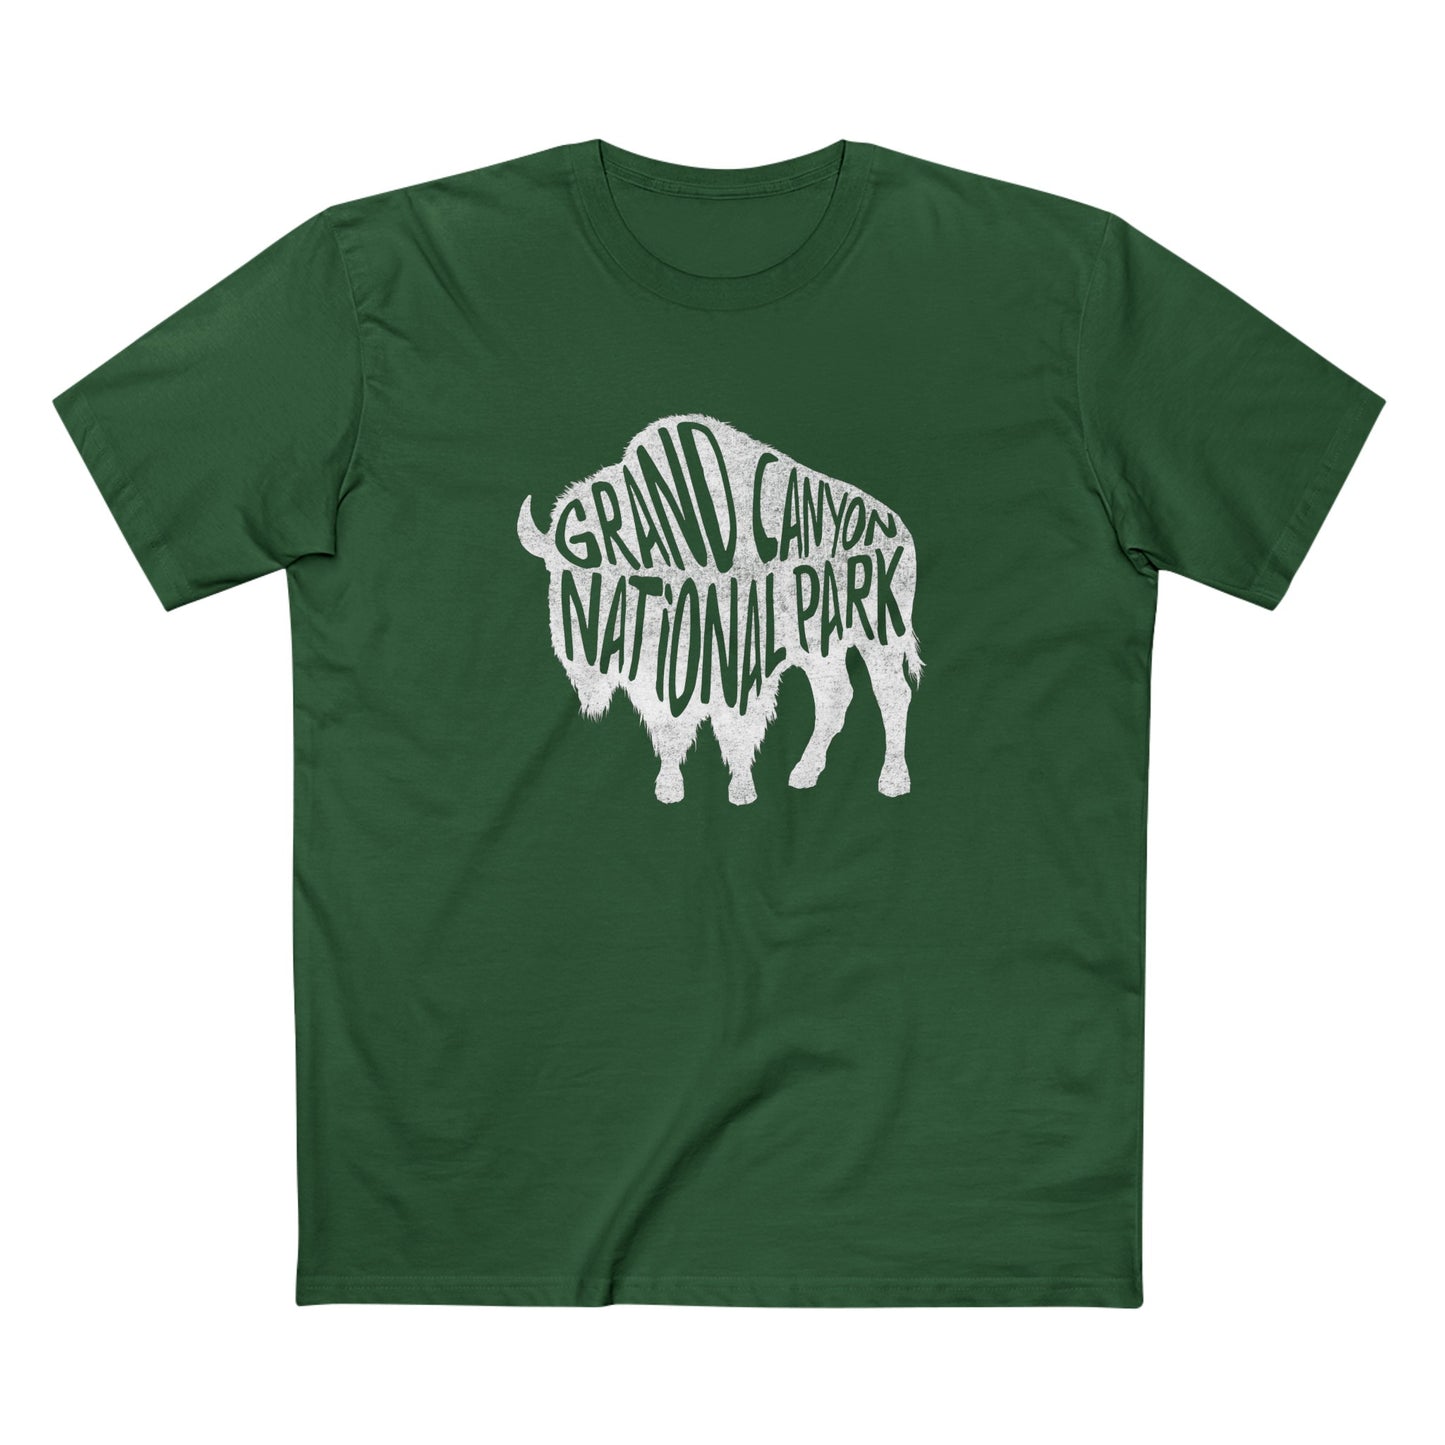 Grand Canyon National Park T-Shirt - Bison